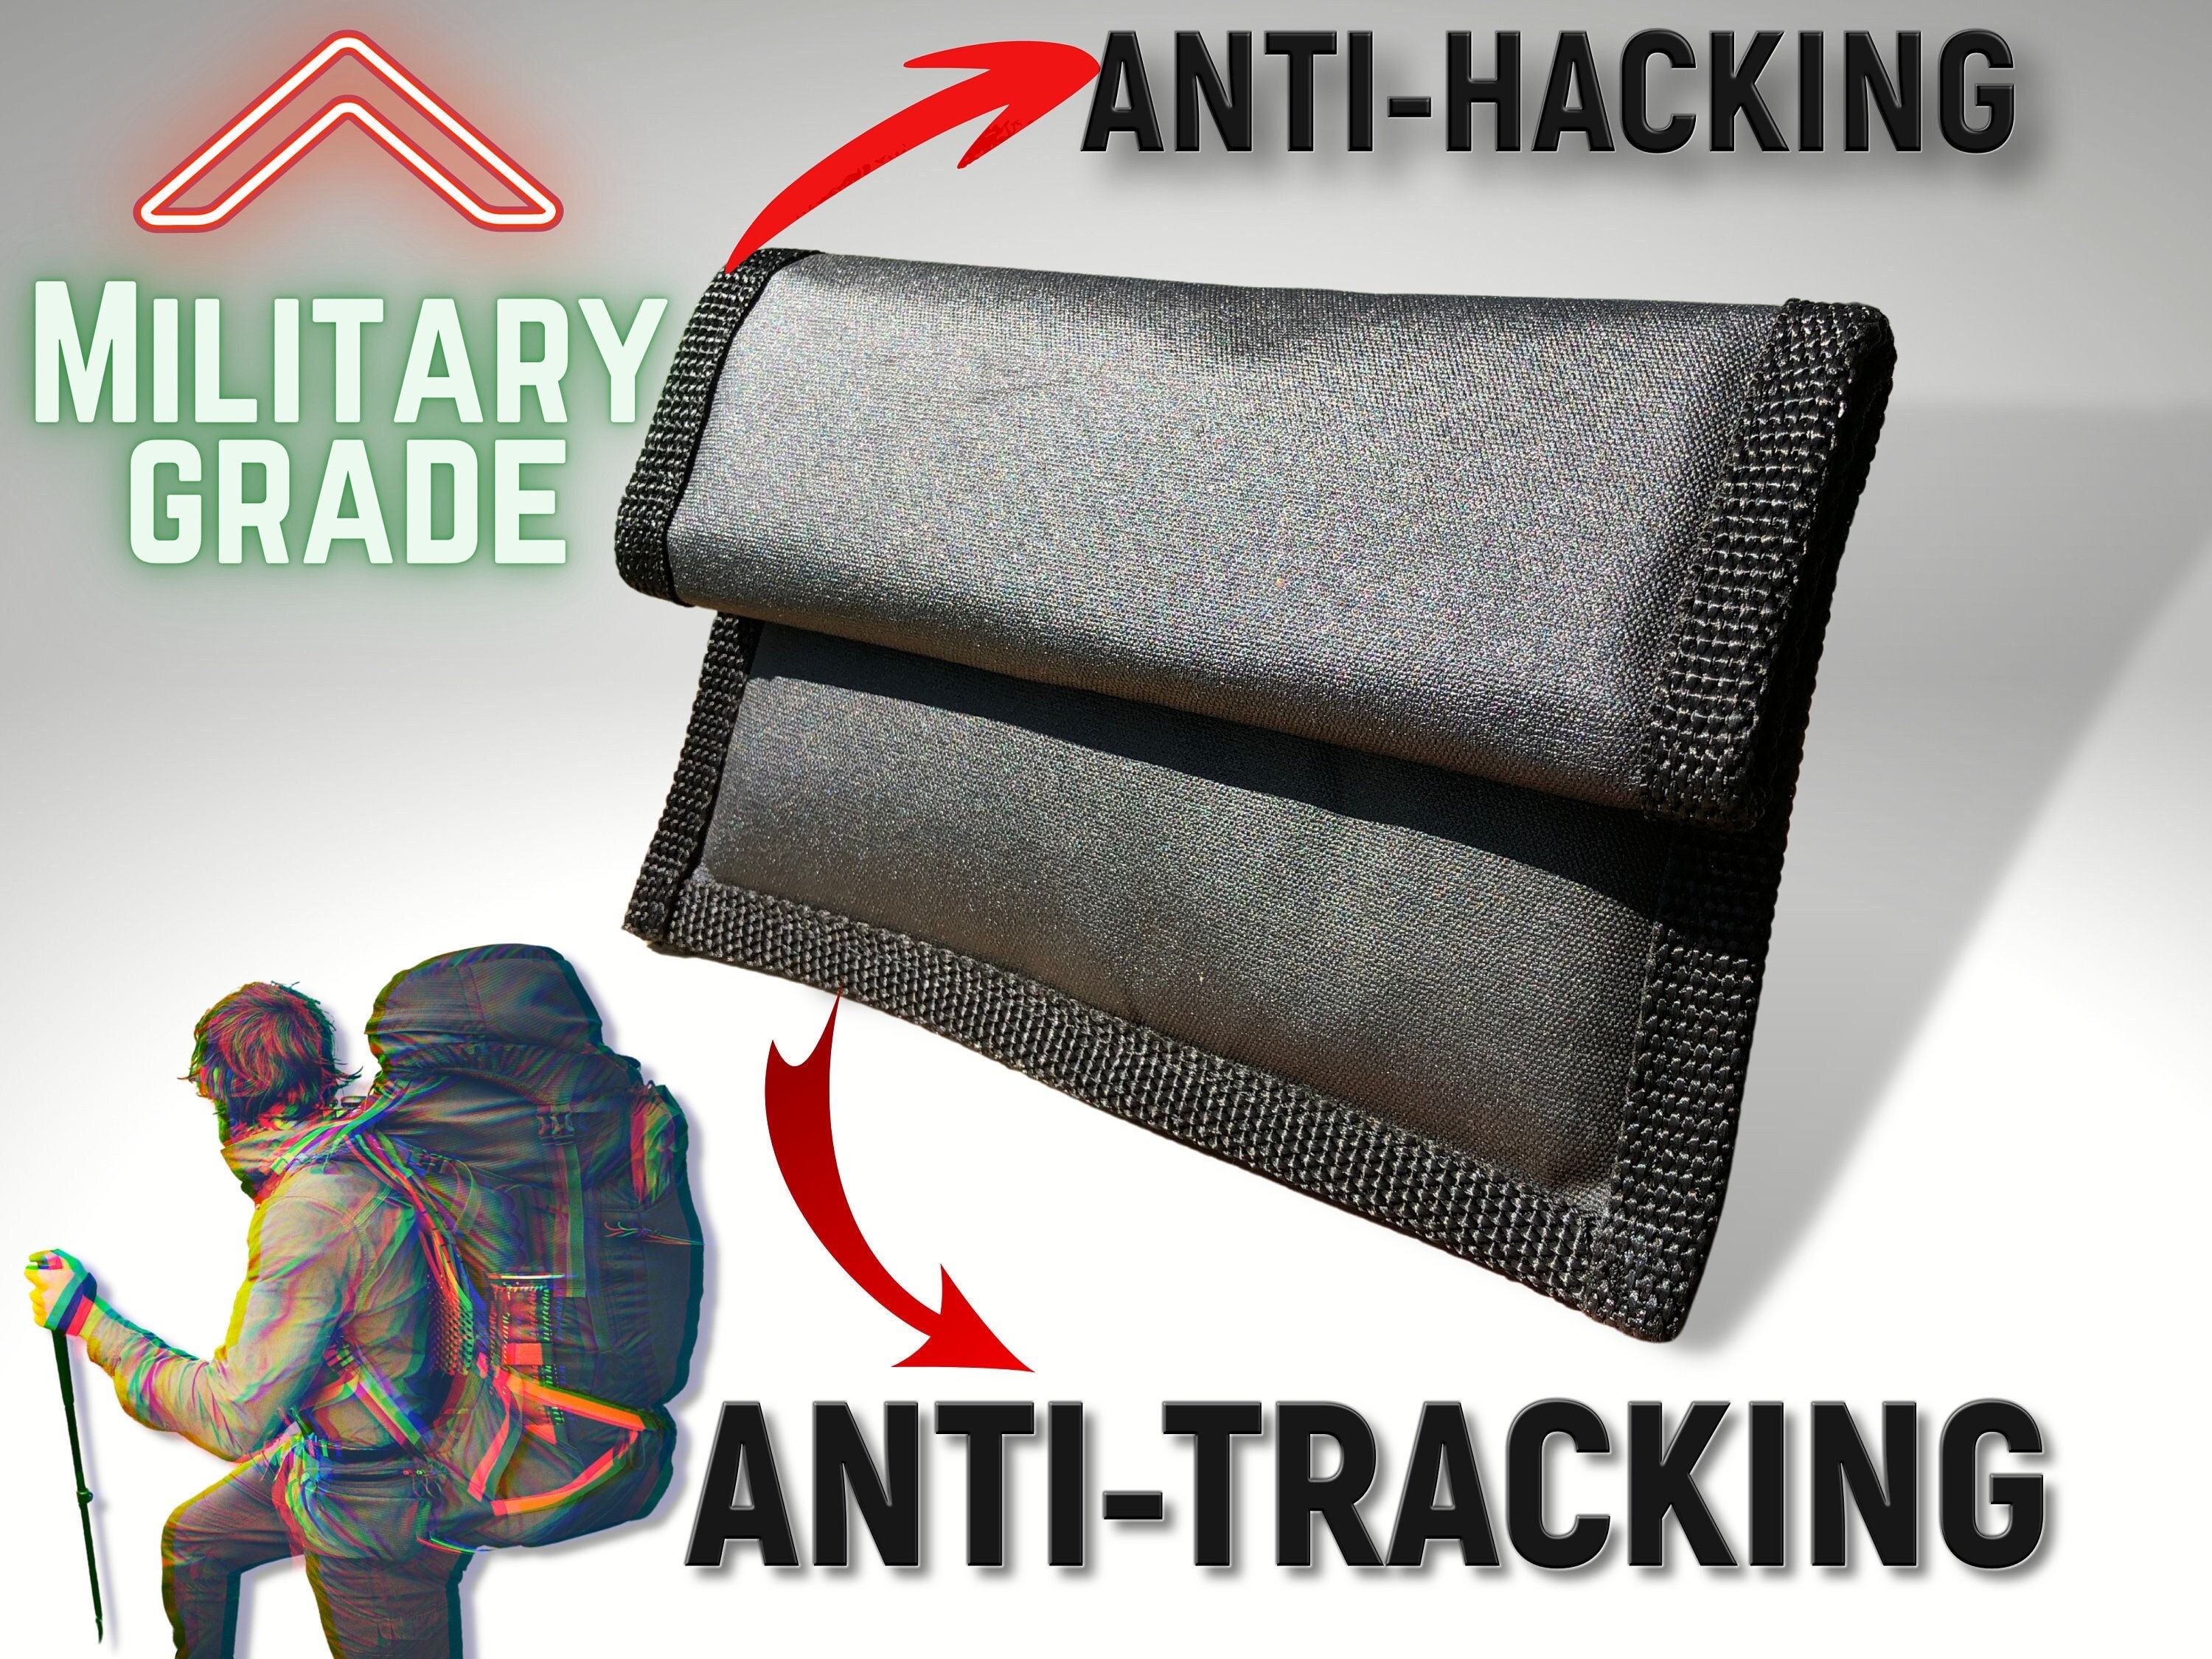 Anti-tracking / Anti-hacking Faraday Bag Top Gun Block E.M.F. Radiation  SECURITY / PRIVACY / HEALTH / Survivalist / Prepper / Invisible 